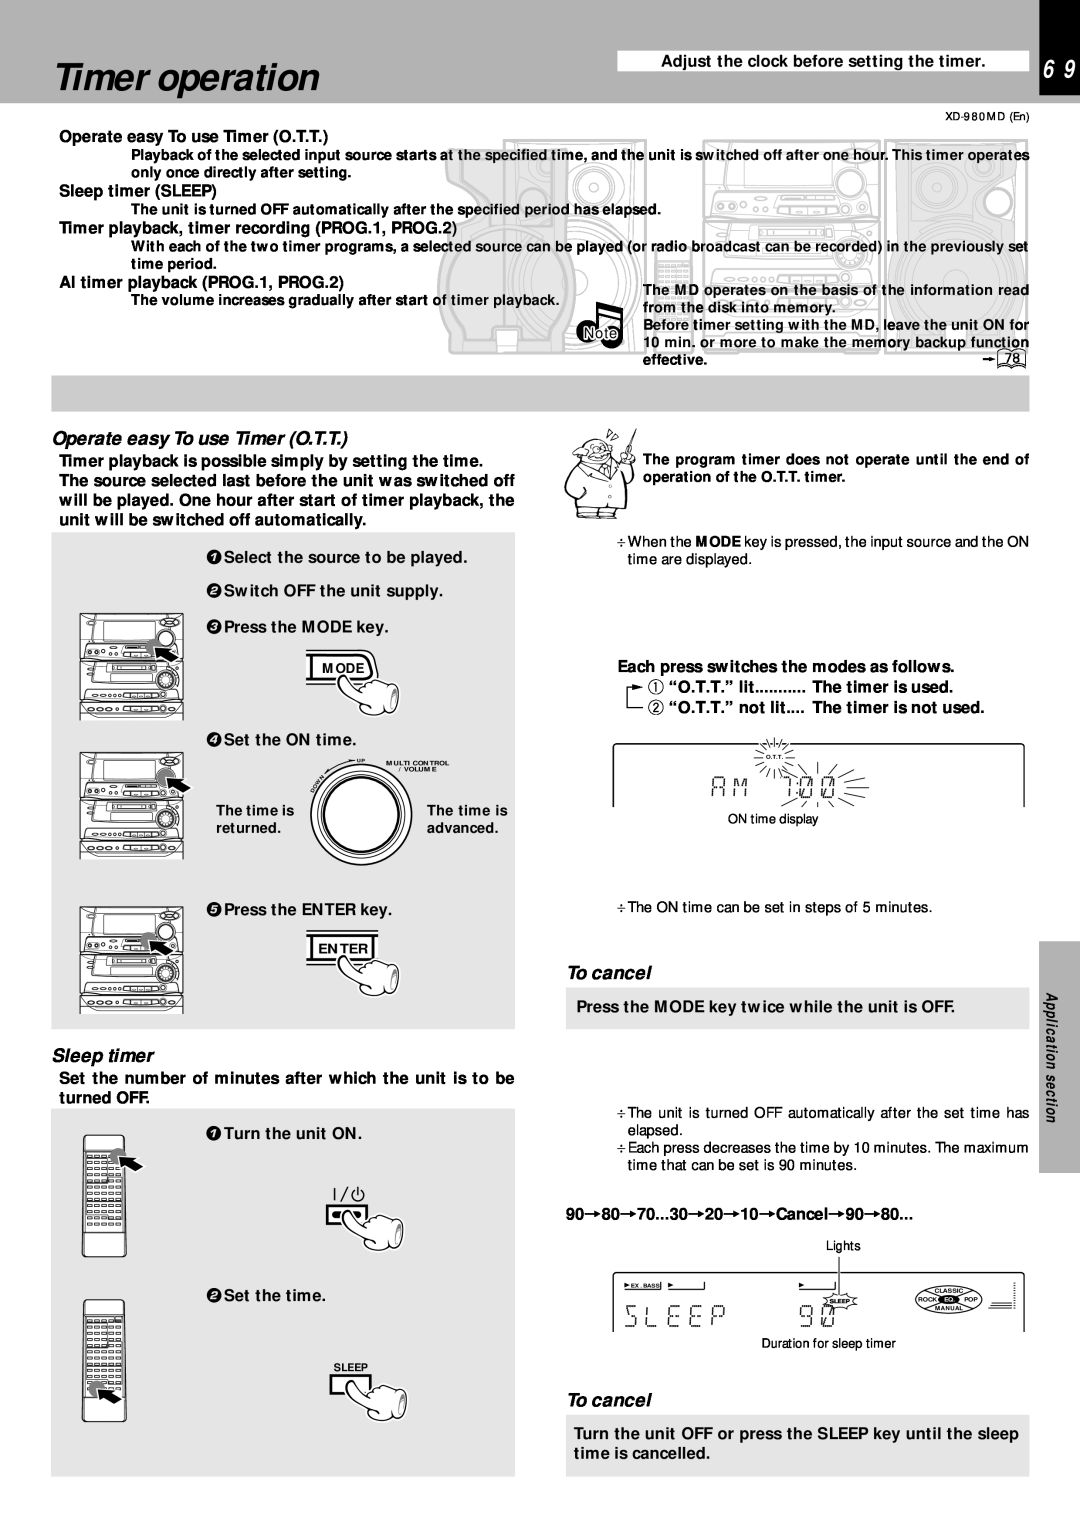 Kenwood XD-980MD instruction manual Timer operation, s L E E P, Operate easy To use Timer O.T.T, Sleep timer, To cancel 